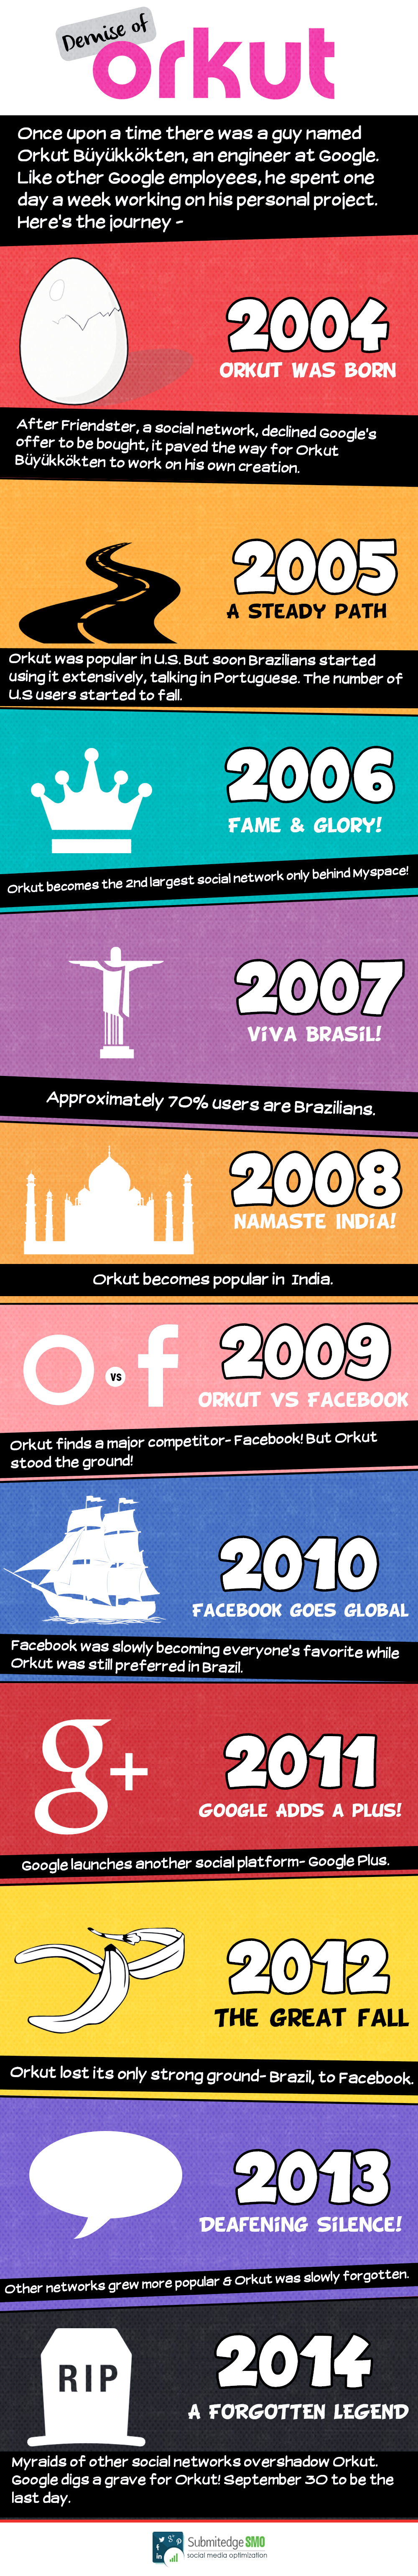 demise of orkut